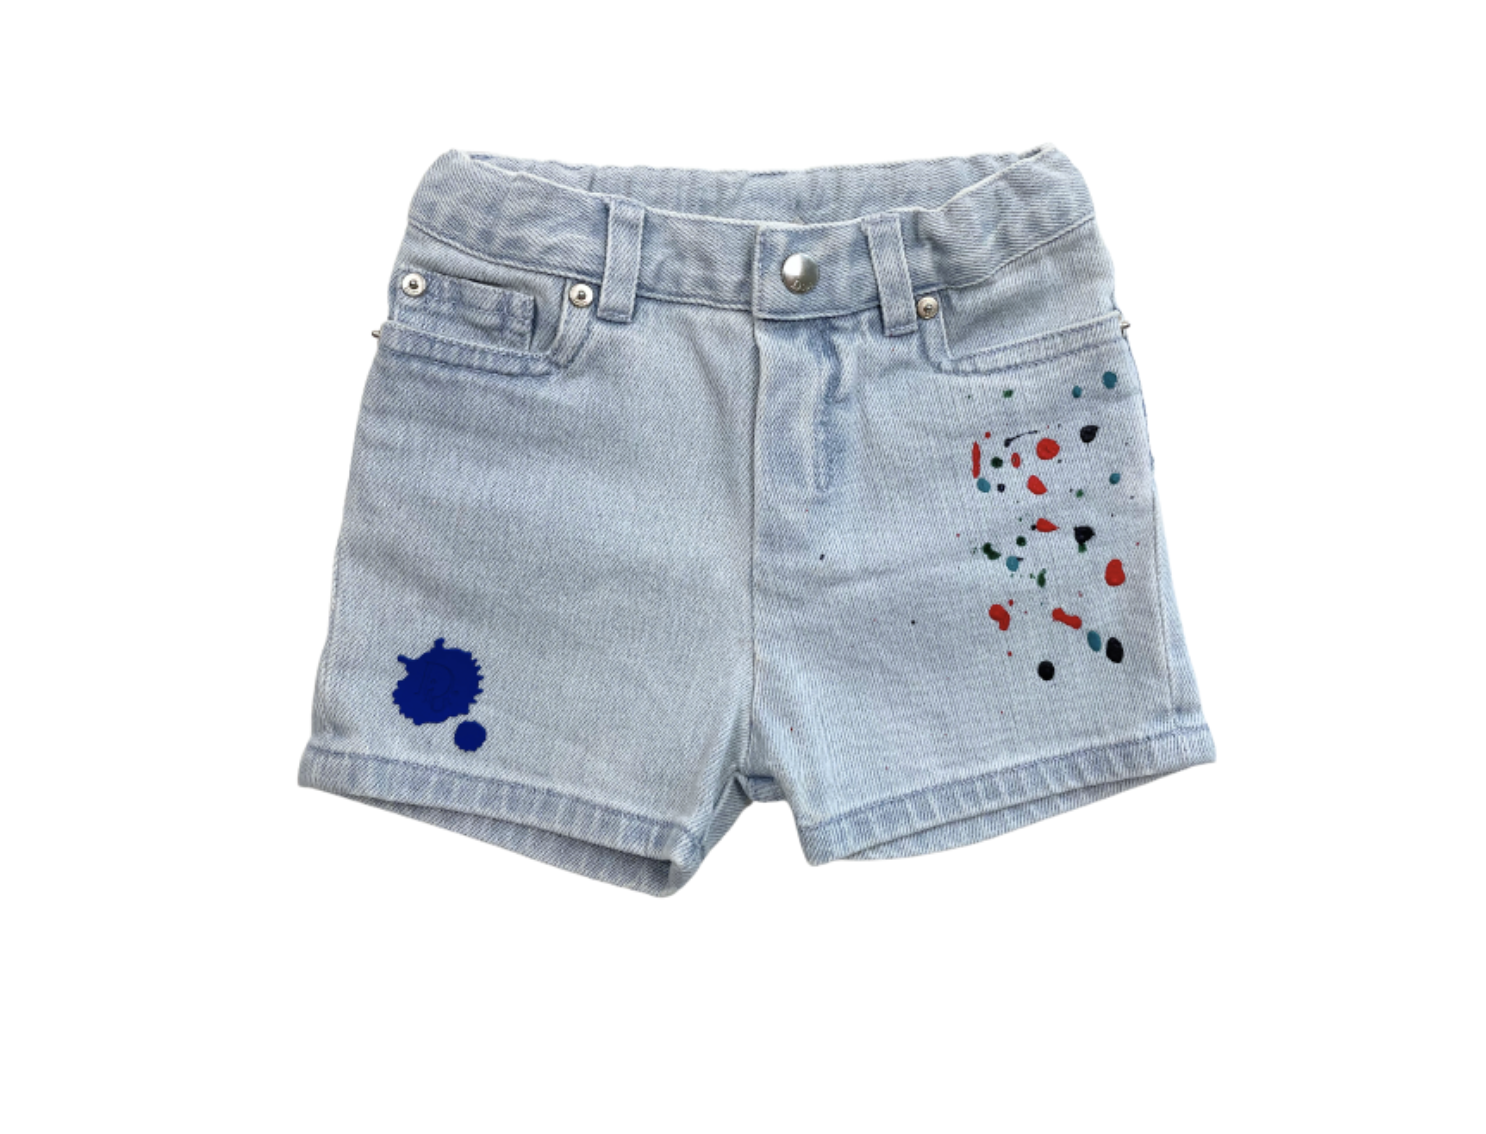 BABY DIOR - Short en jean motif taches de peinture - 3 mois